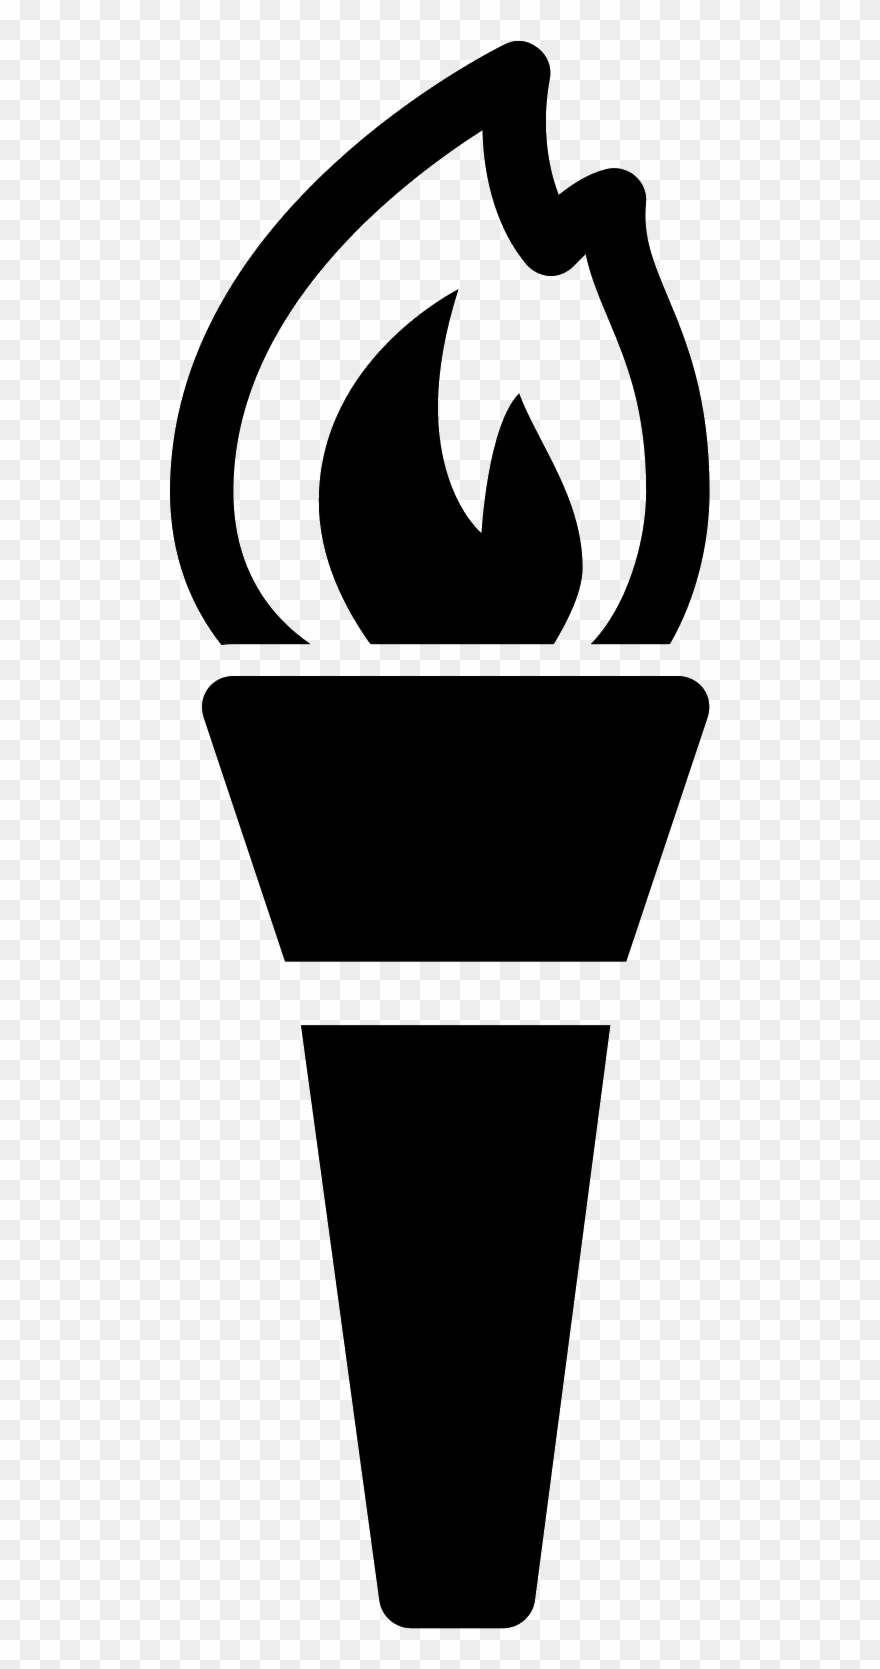 Py torch. Олимпийский факел icon. Факел пиктограмма. Факел символ. Факел вектор.